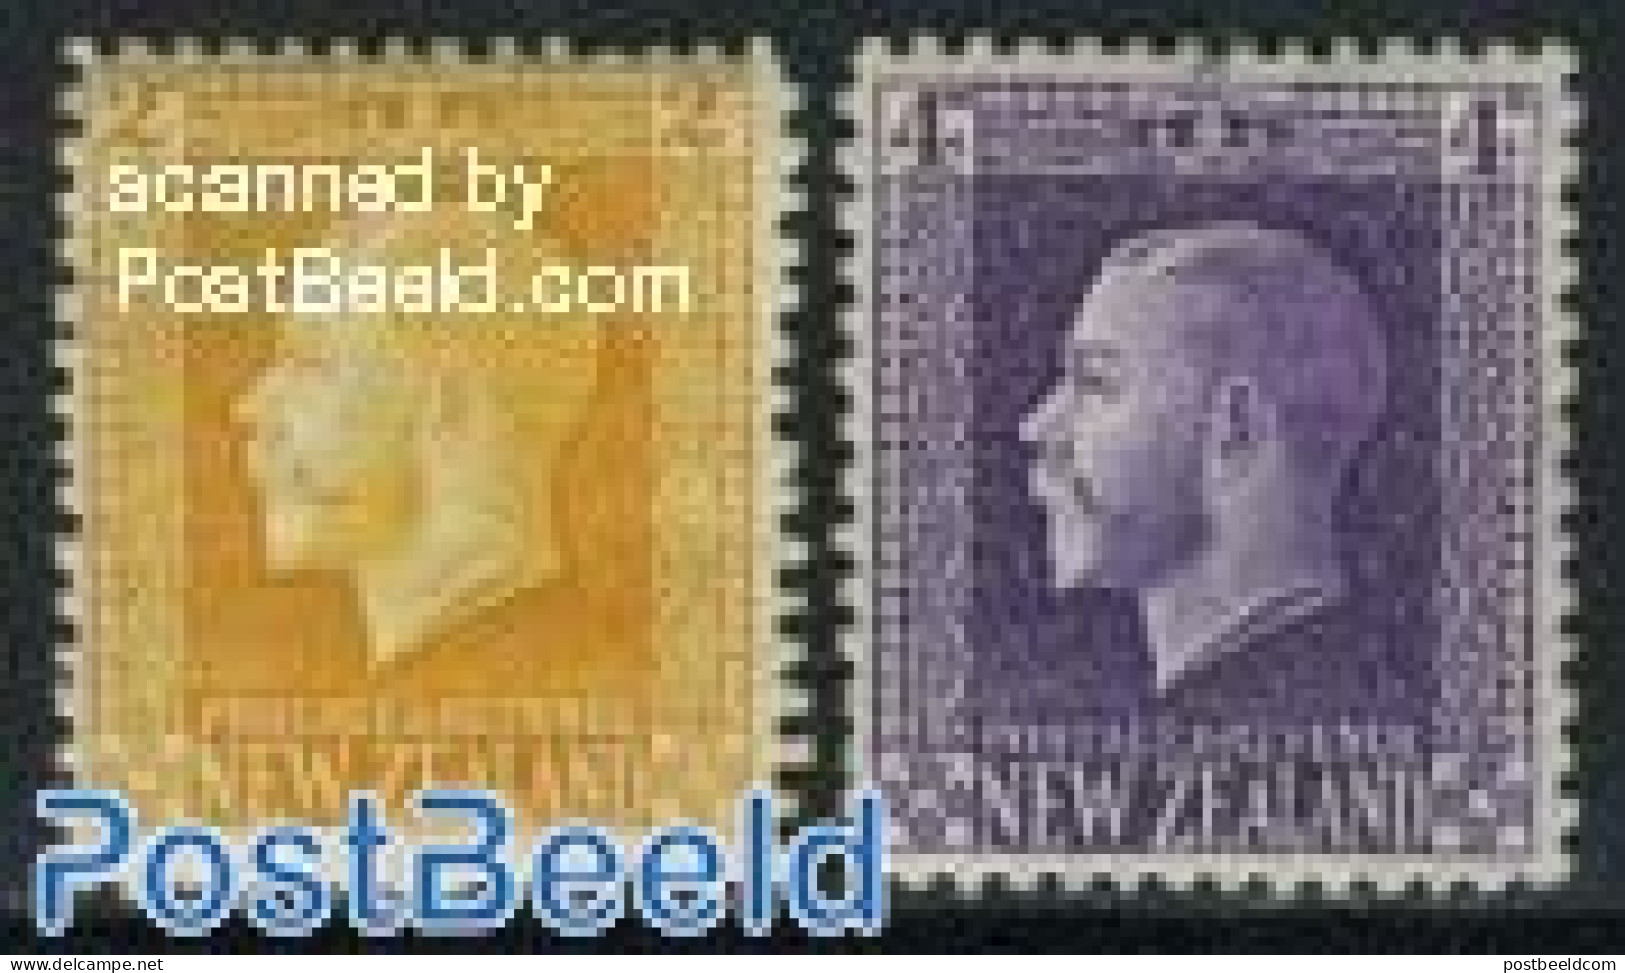 New Zealand 1916 Definitives 2v, Unused (hinged) - Unused Stamps